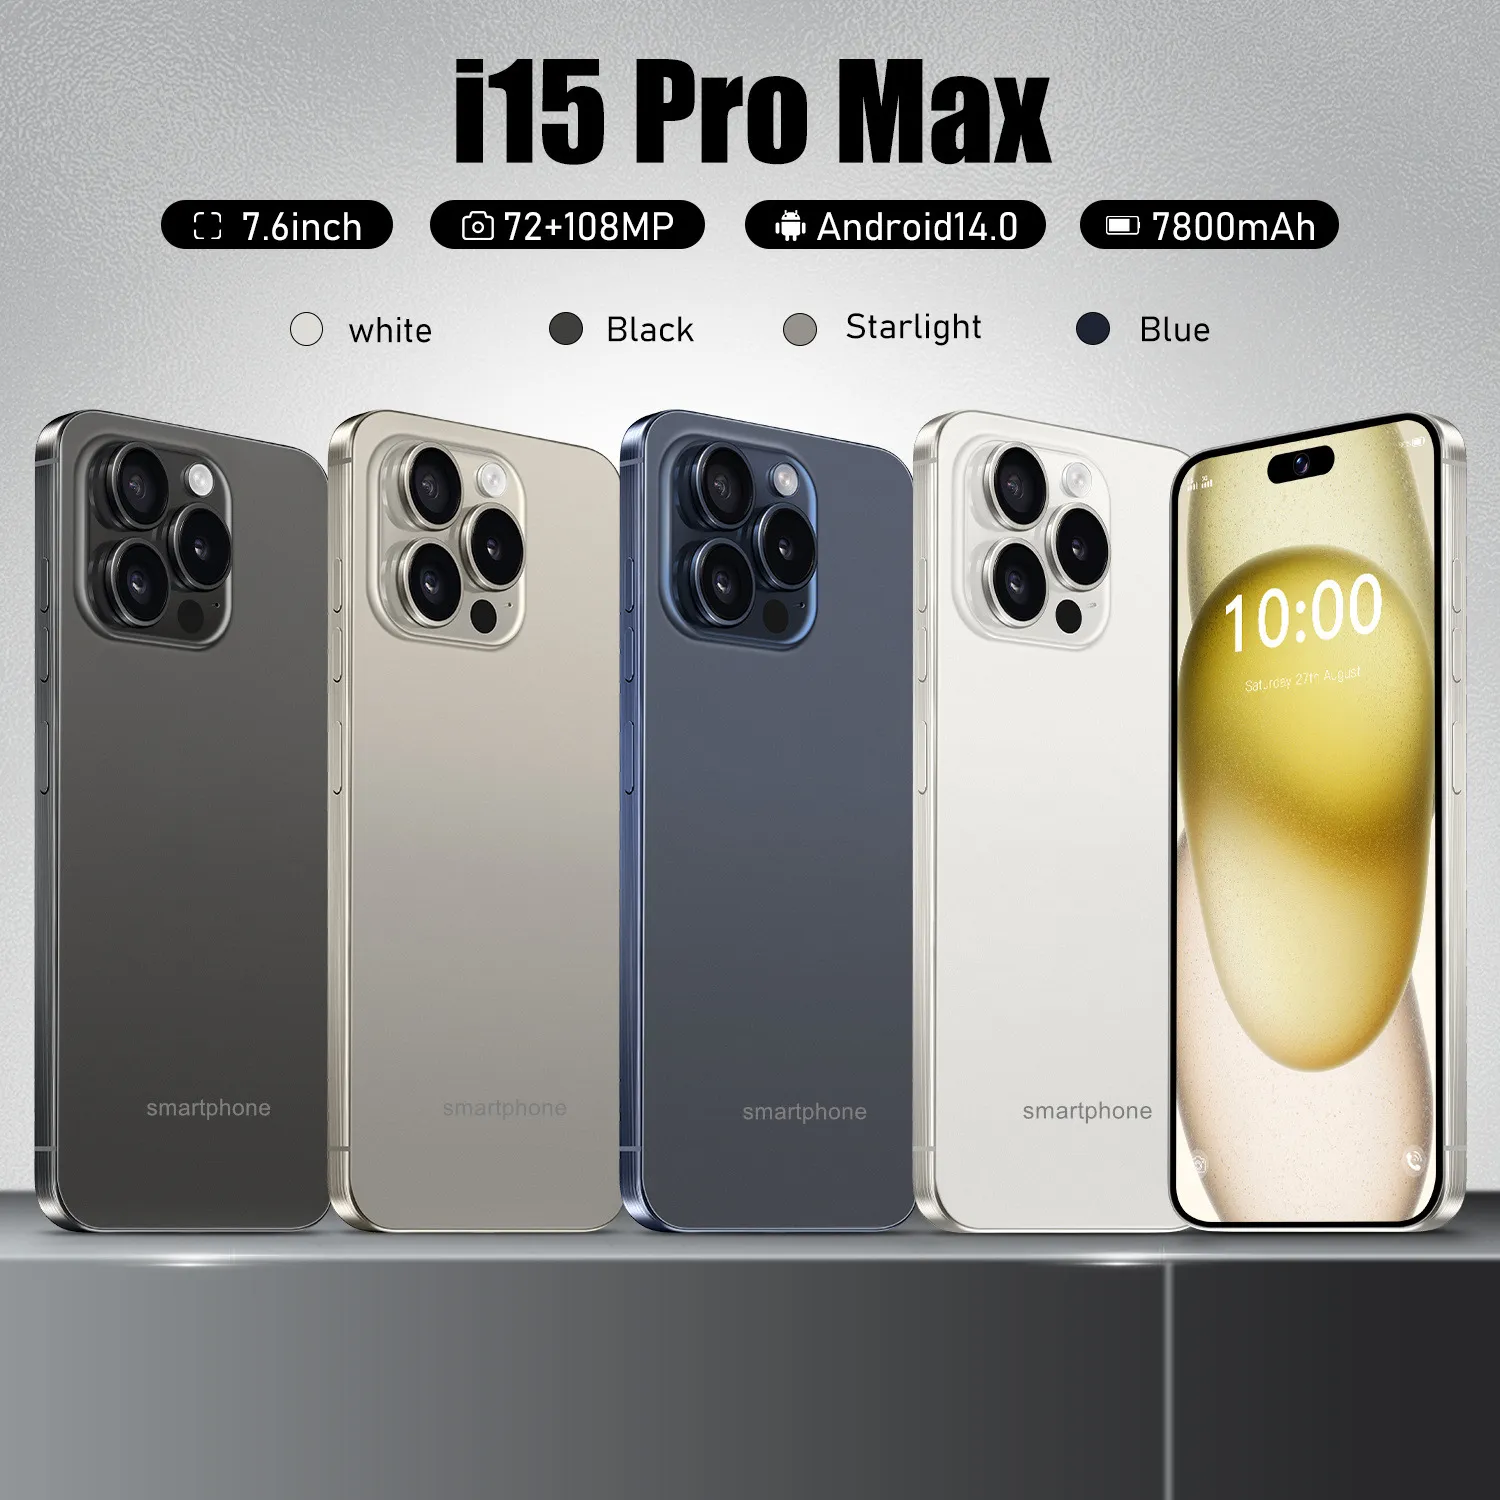 15 Pro Max Show 5G Mobilephone 64 GB ROM Mobiele 6,8 -inch Proteerbare camera Bluetooth WiFi WCDMA Mobiephone met doos